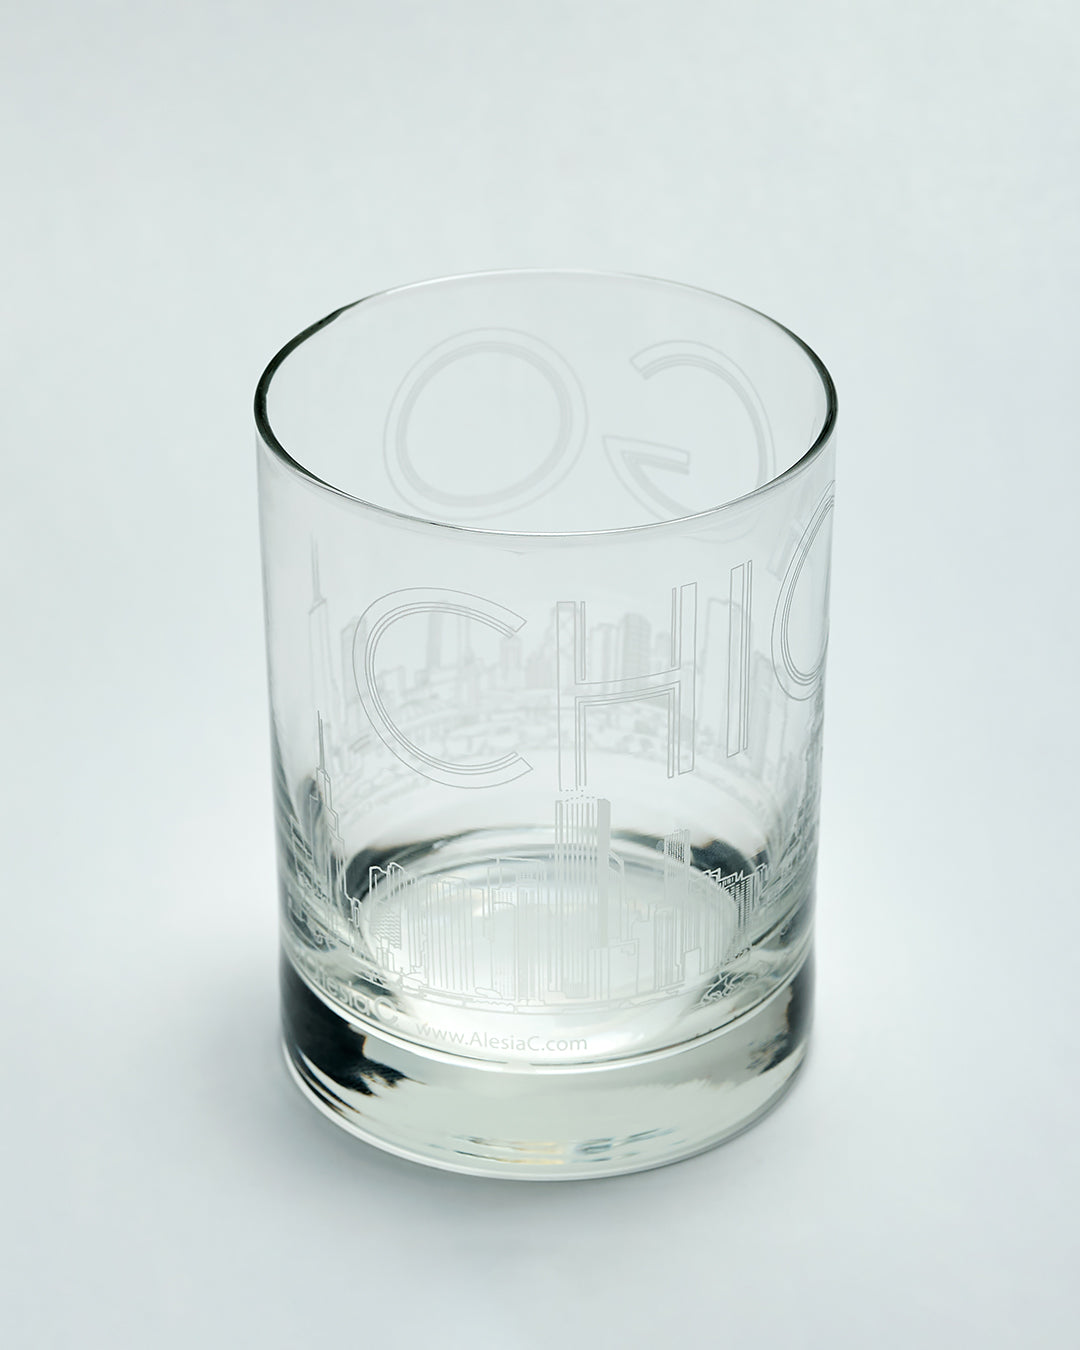 CHICAGO Hostess Gift City Skyline Art Drinkware Glass Set of 2 by arist Alesia Chaika